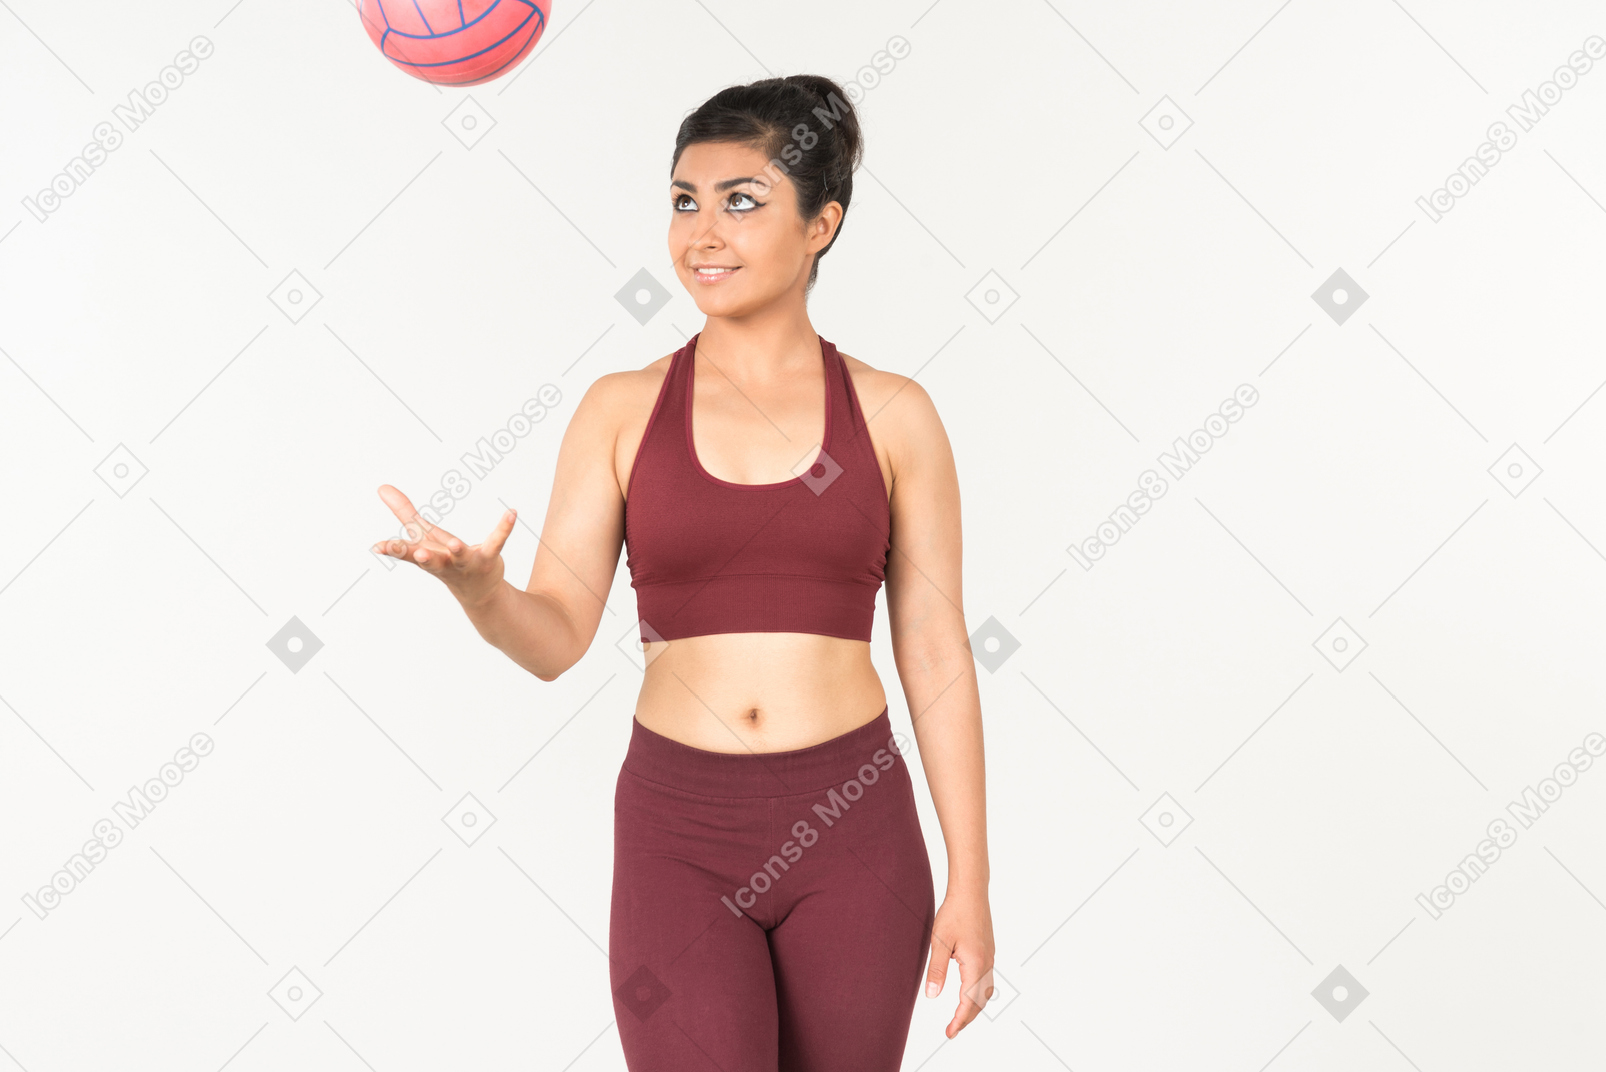 Sporstwear投掷球的年轻印度女人